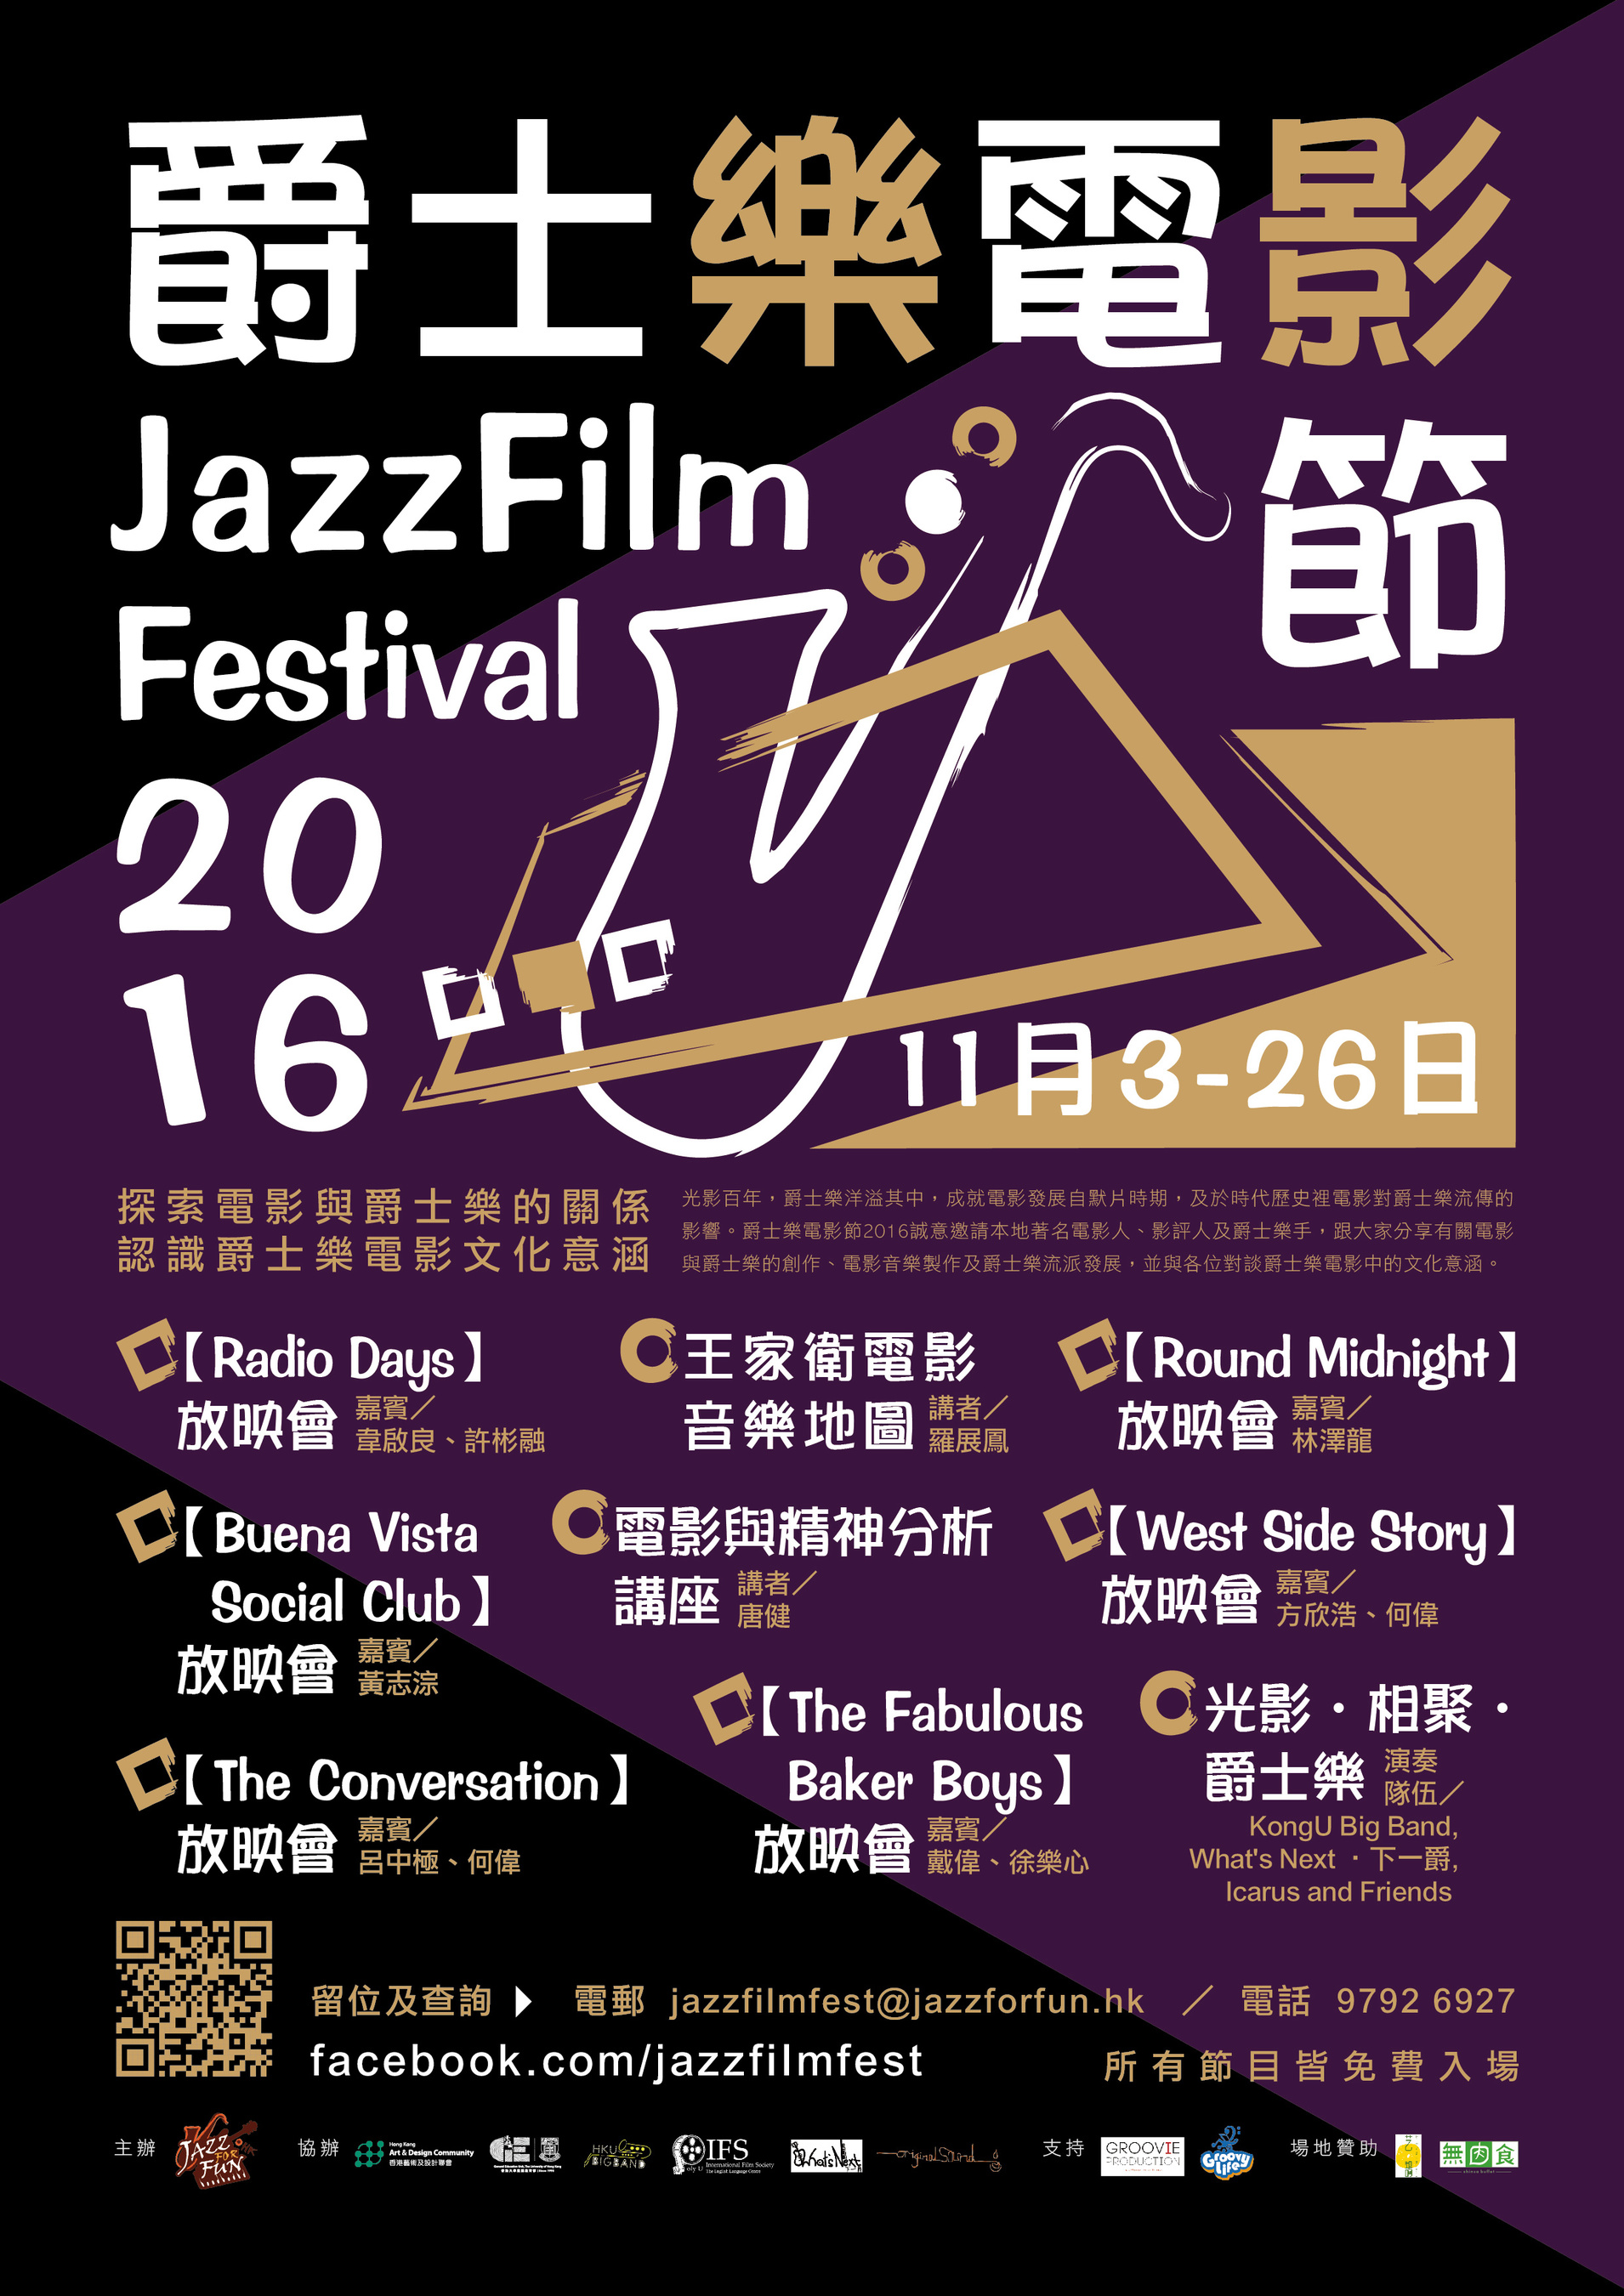 Jazz Film Festival - Buena Vista Social Club